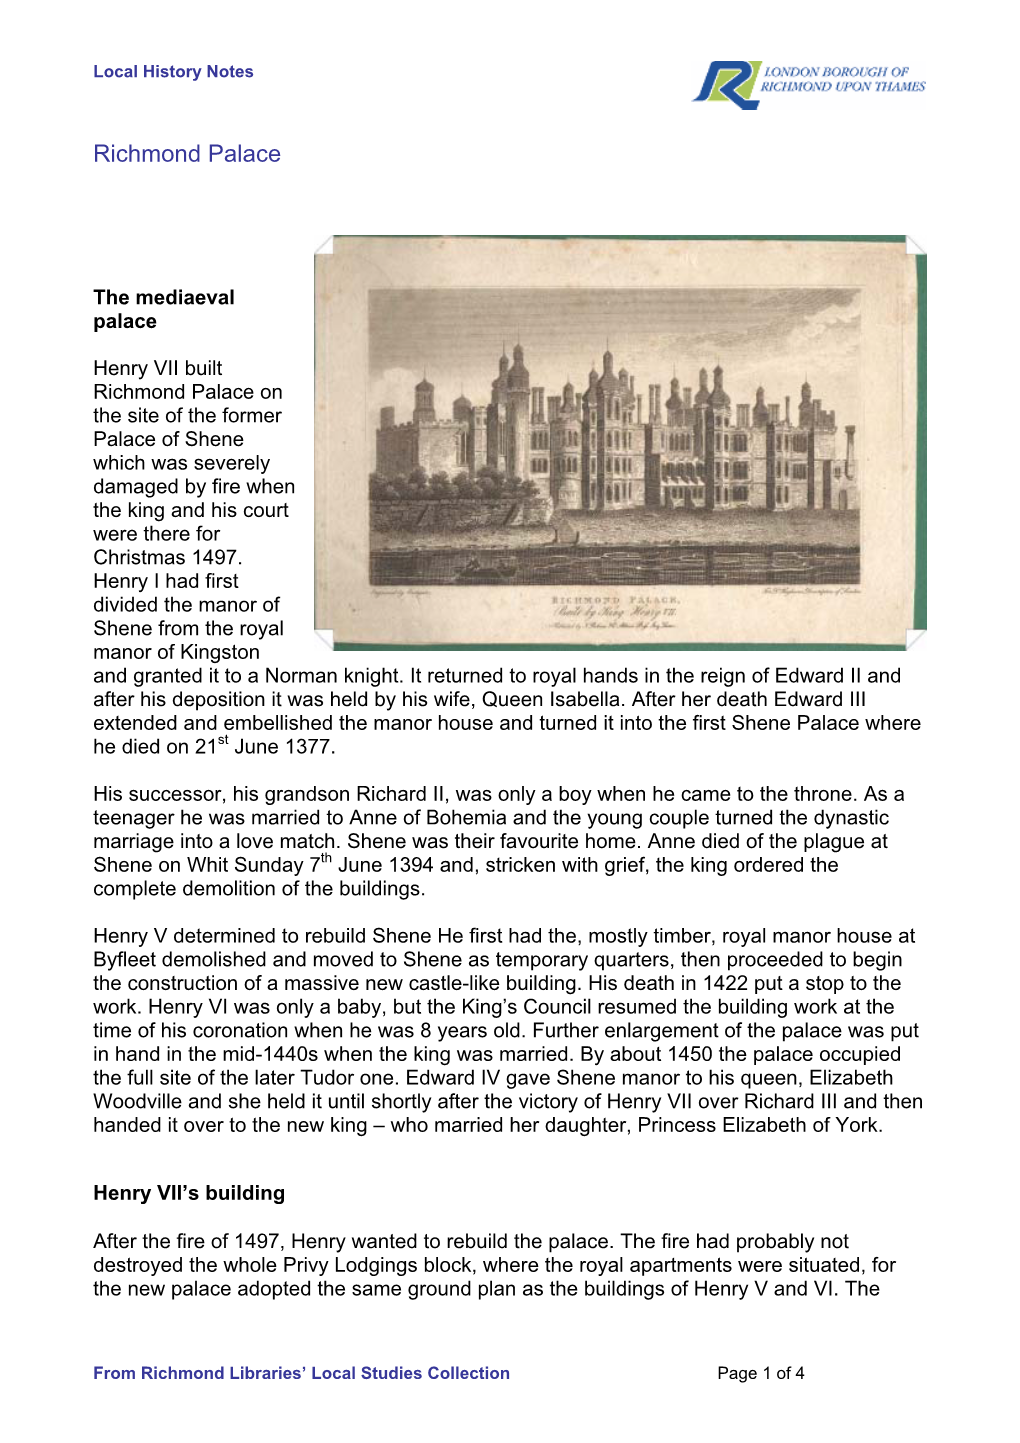 Local History of Richmond Palace!